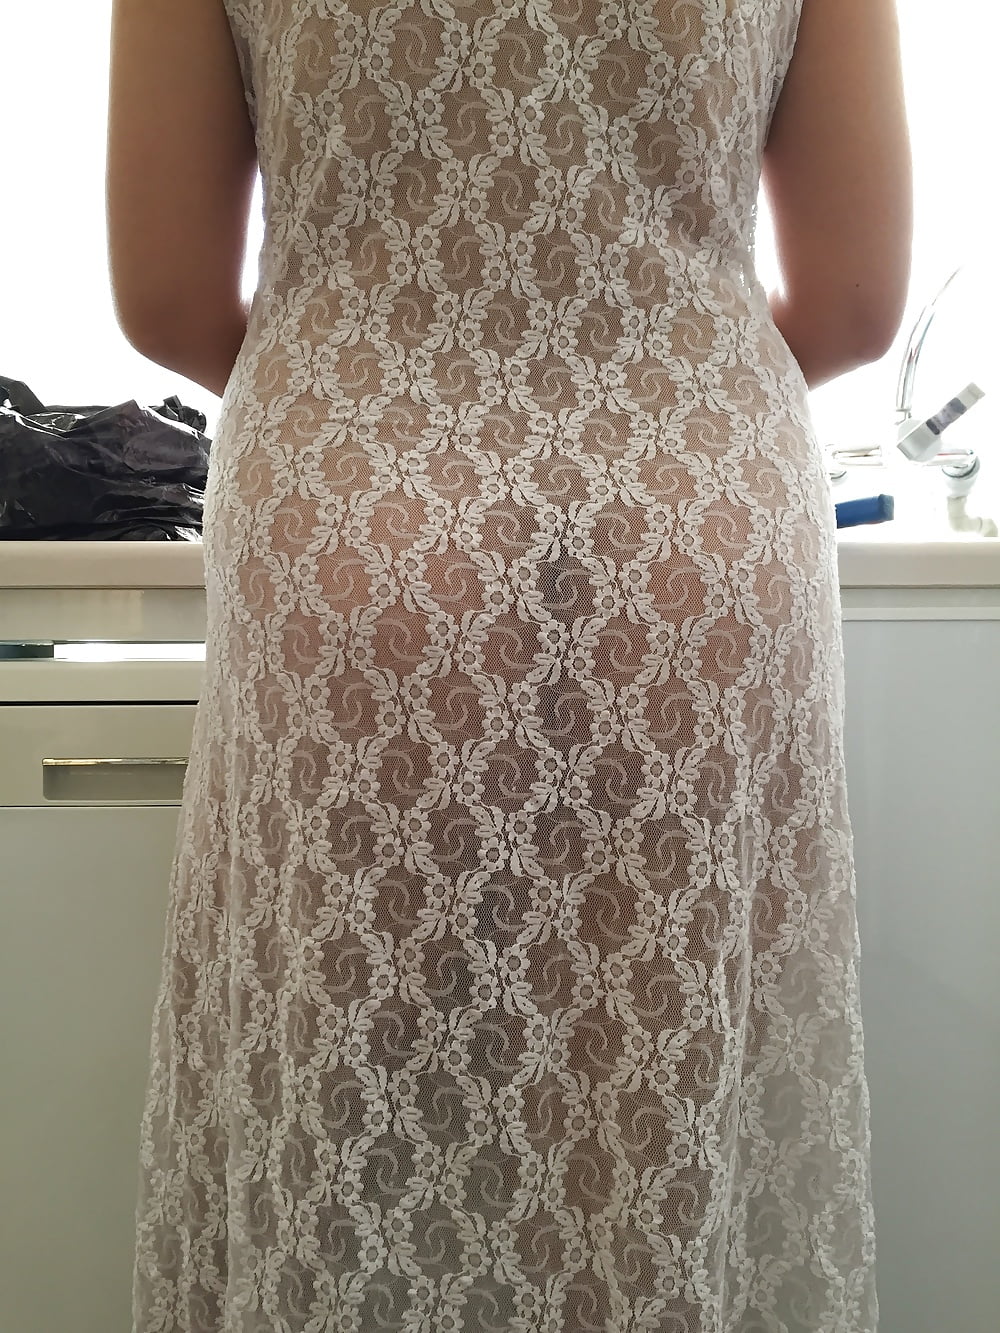 Wife_see_through_Dress (21/22)